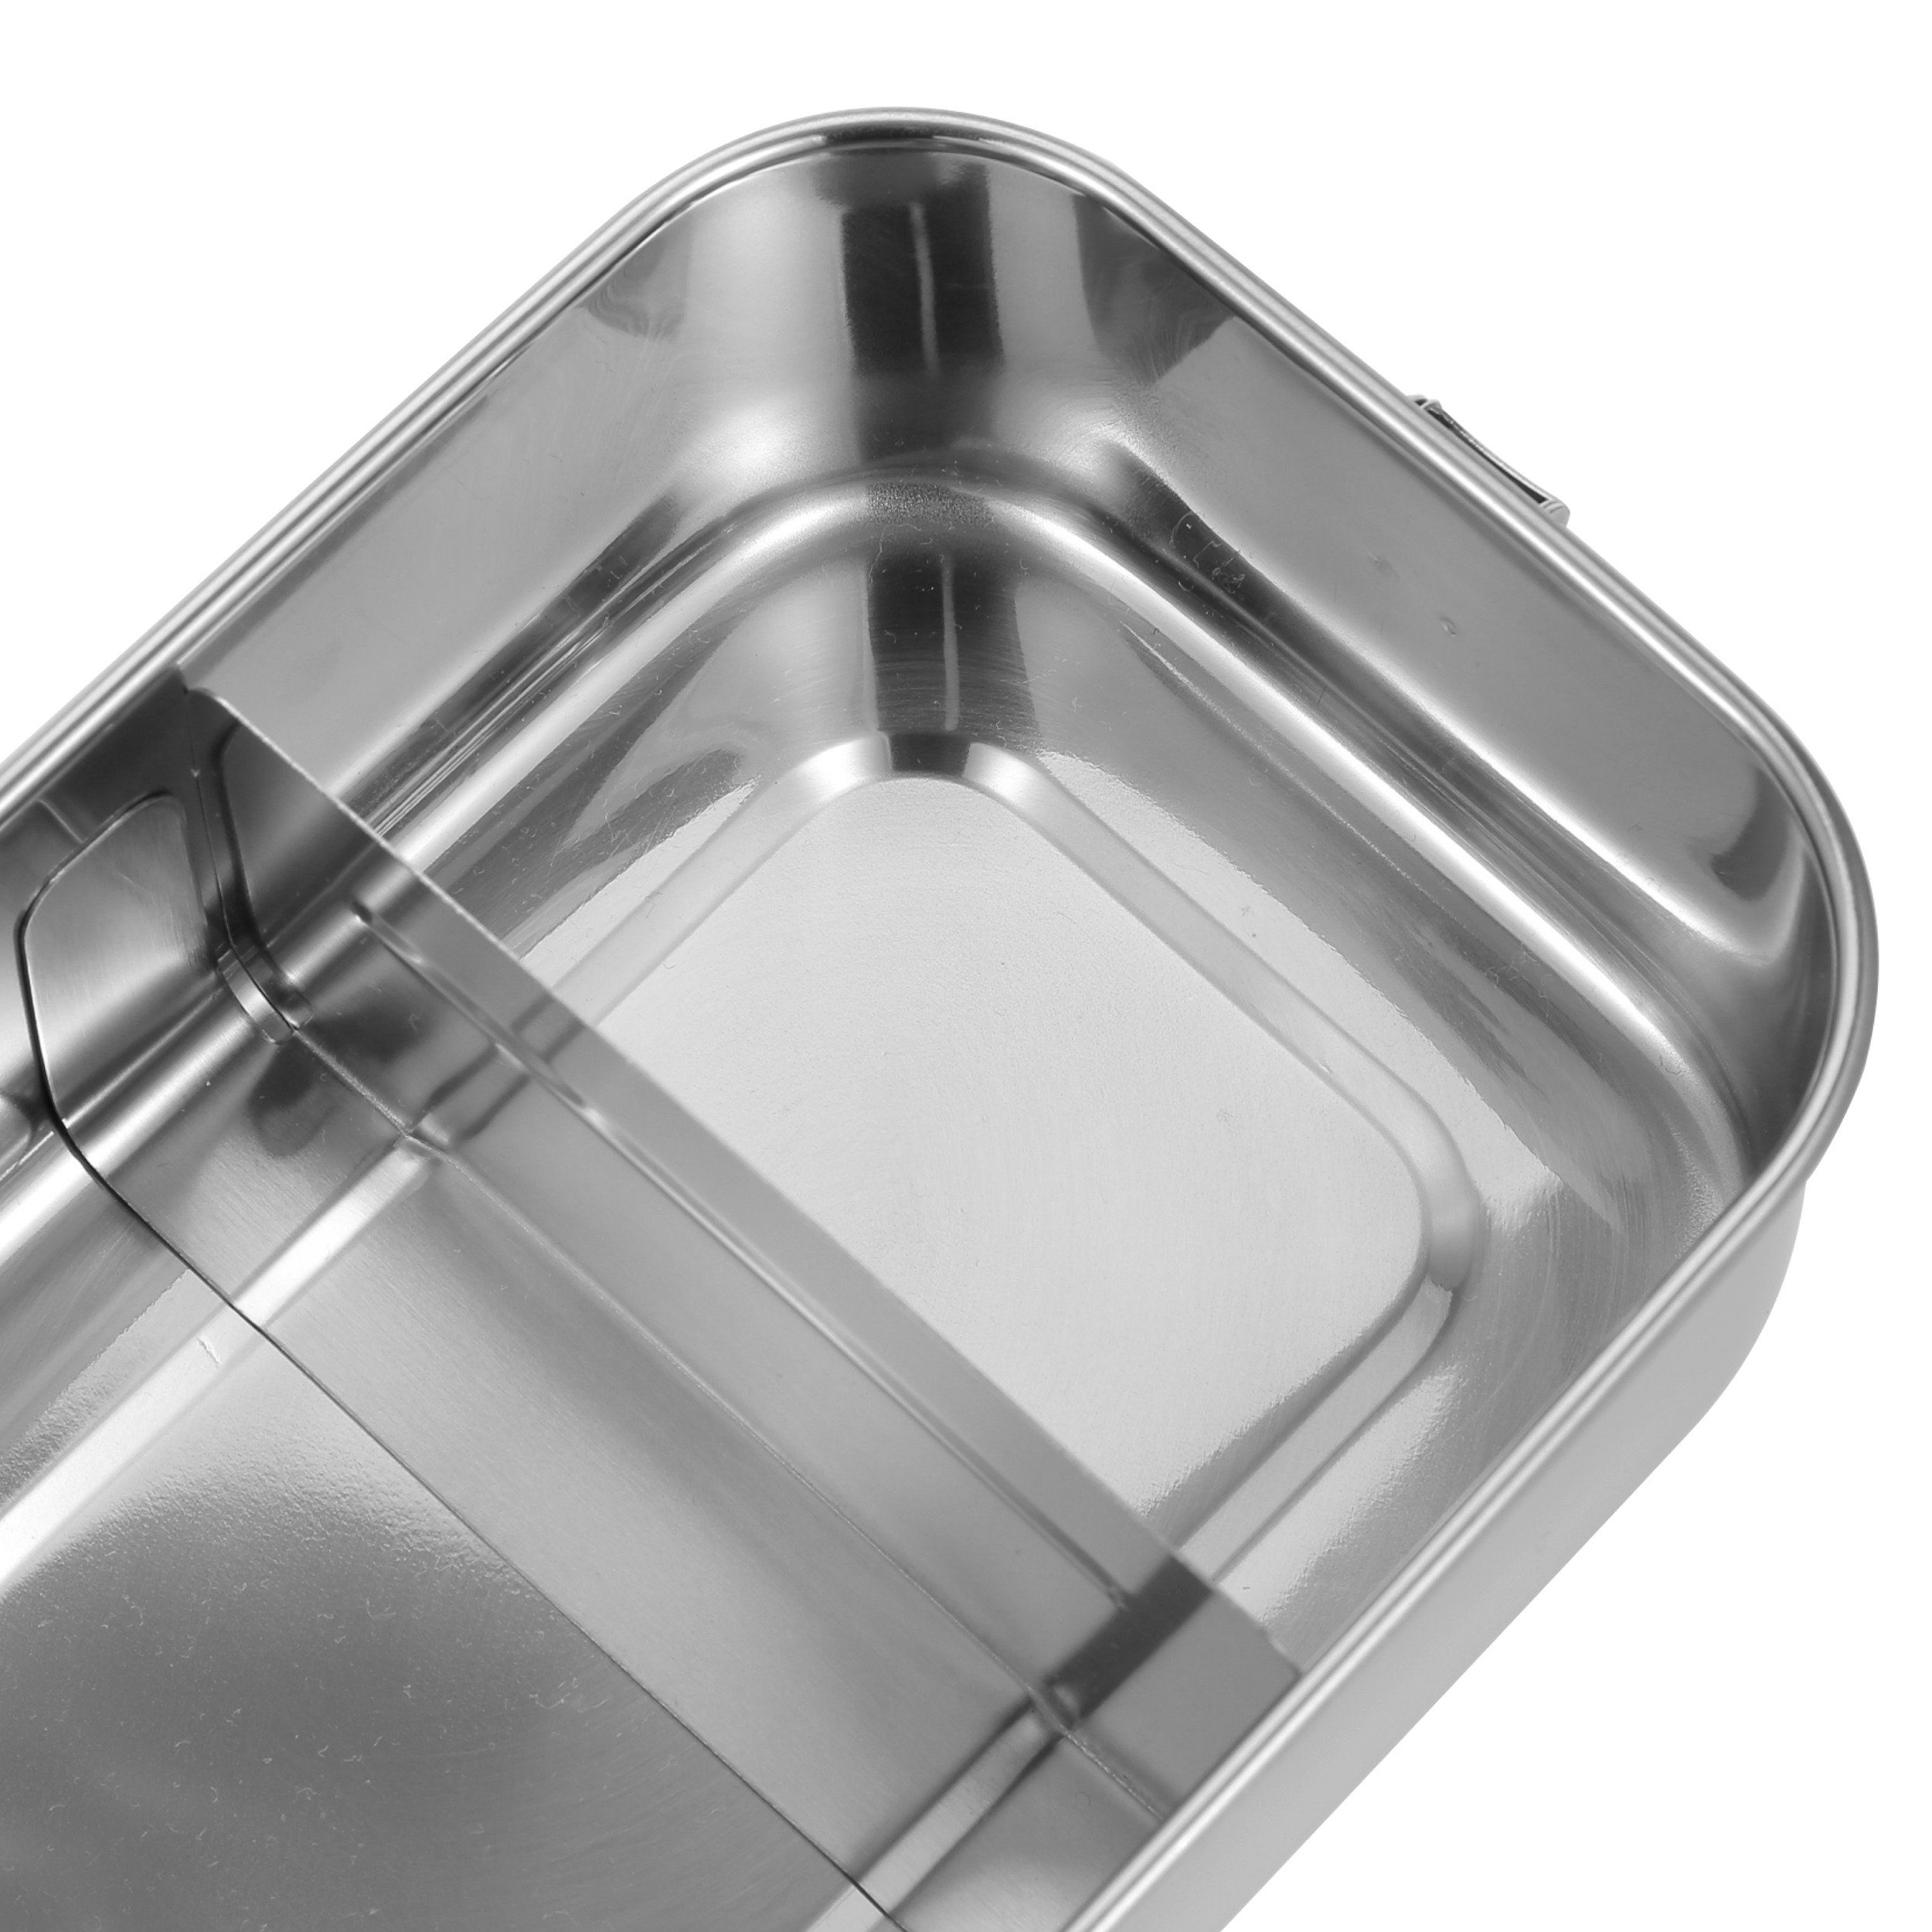 Lunchbox Trinkflasche isoliert Lunchbox JuNiki´s® 550ml + aus 2x JuNiki´s Teefilter Edelstahl, JN Je Edelstahl, Türkis-Blau 2er-Spar-Set: + Premium-Schüler-Set